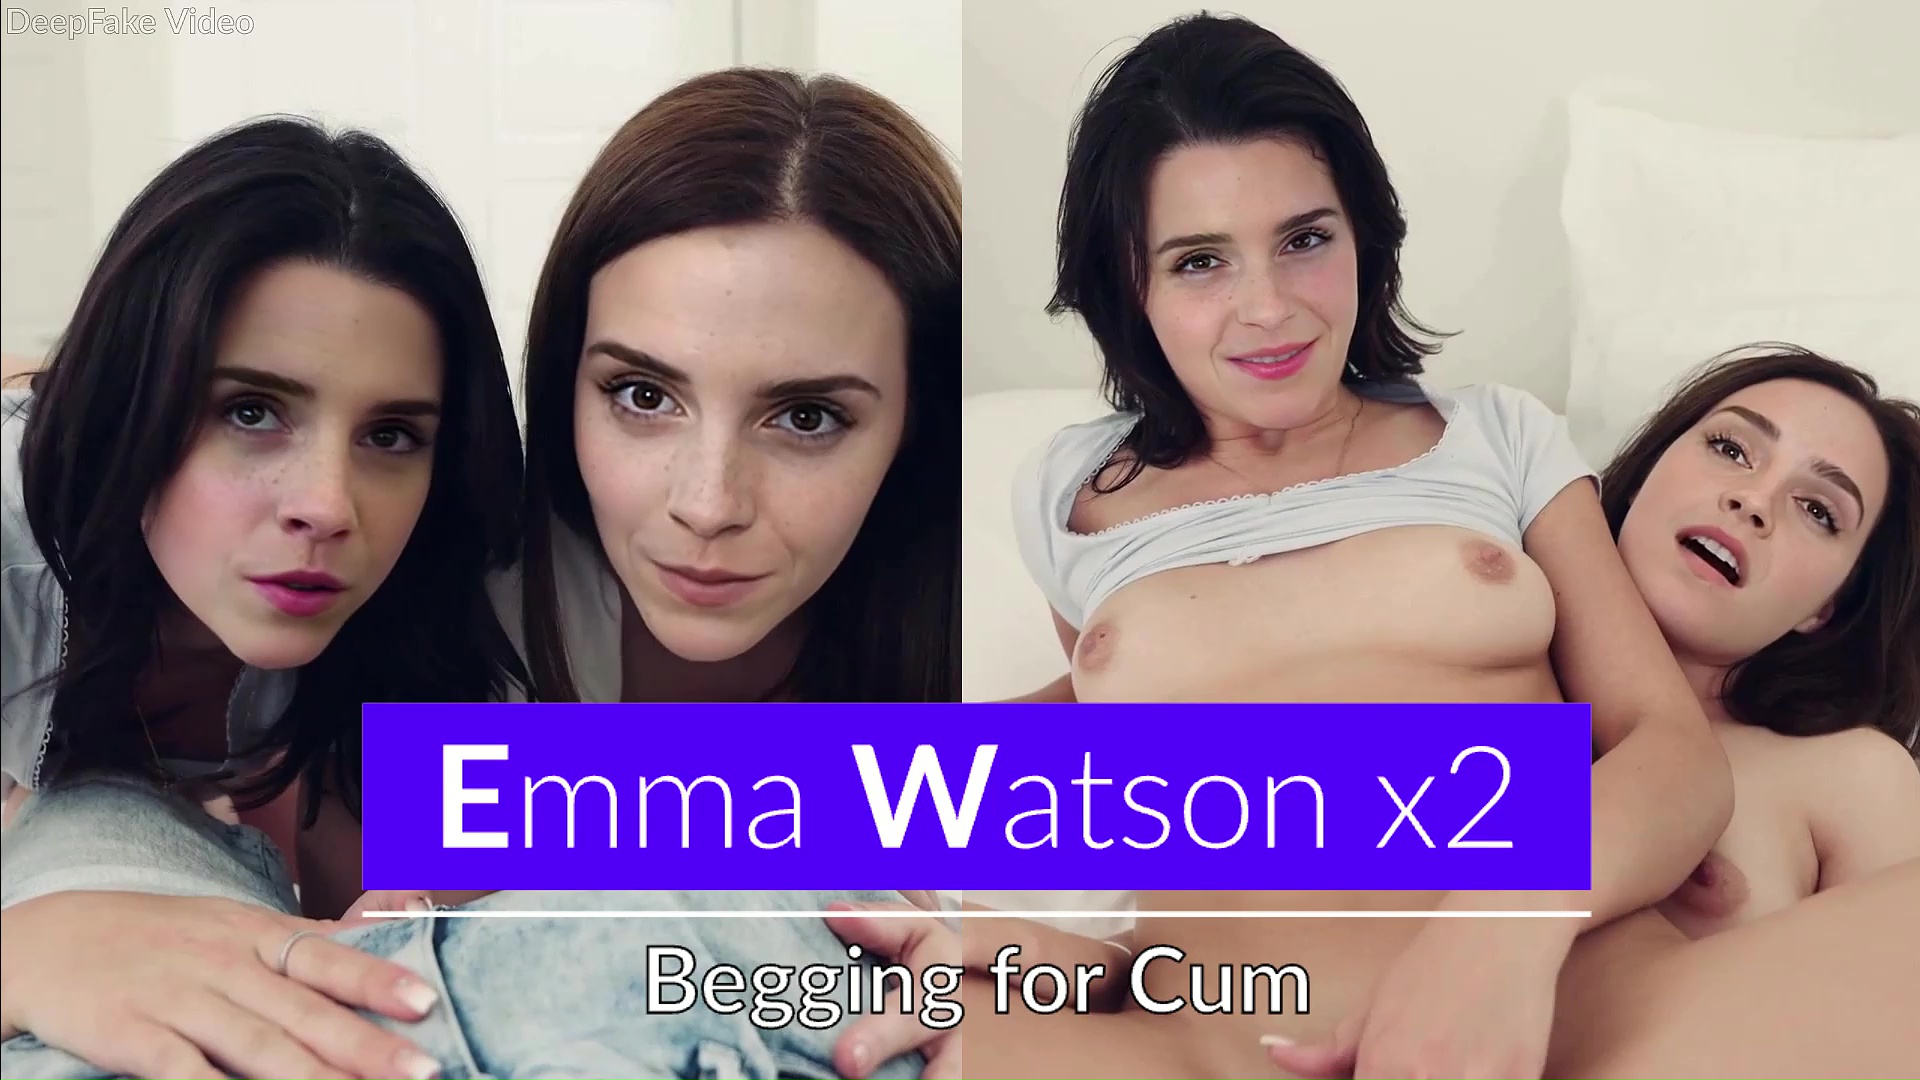 Emma Watson x2- Begging for Cum - Trailer